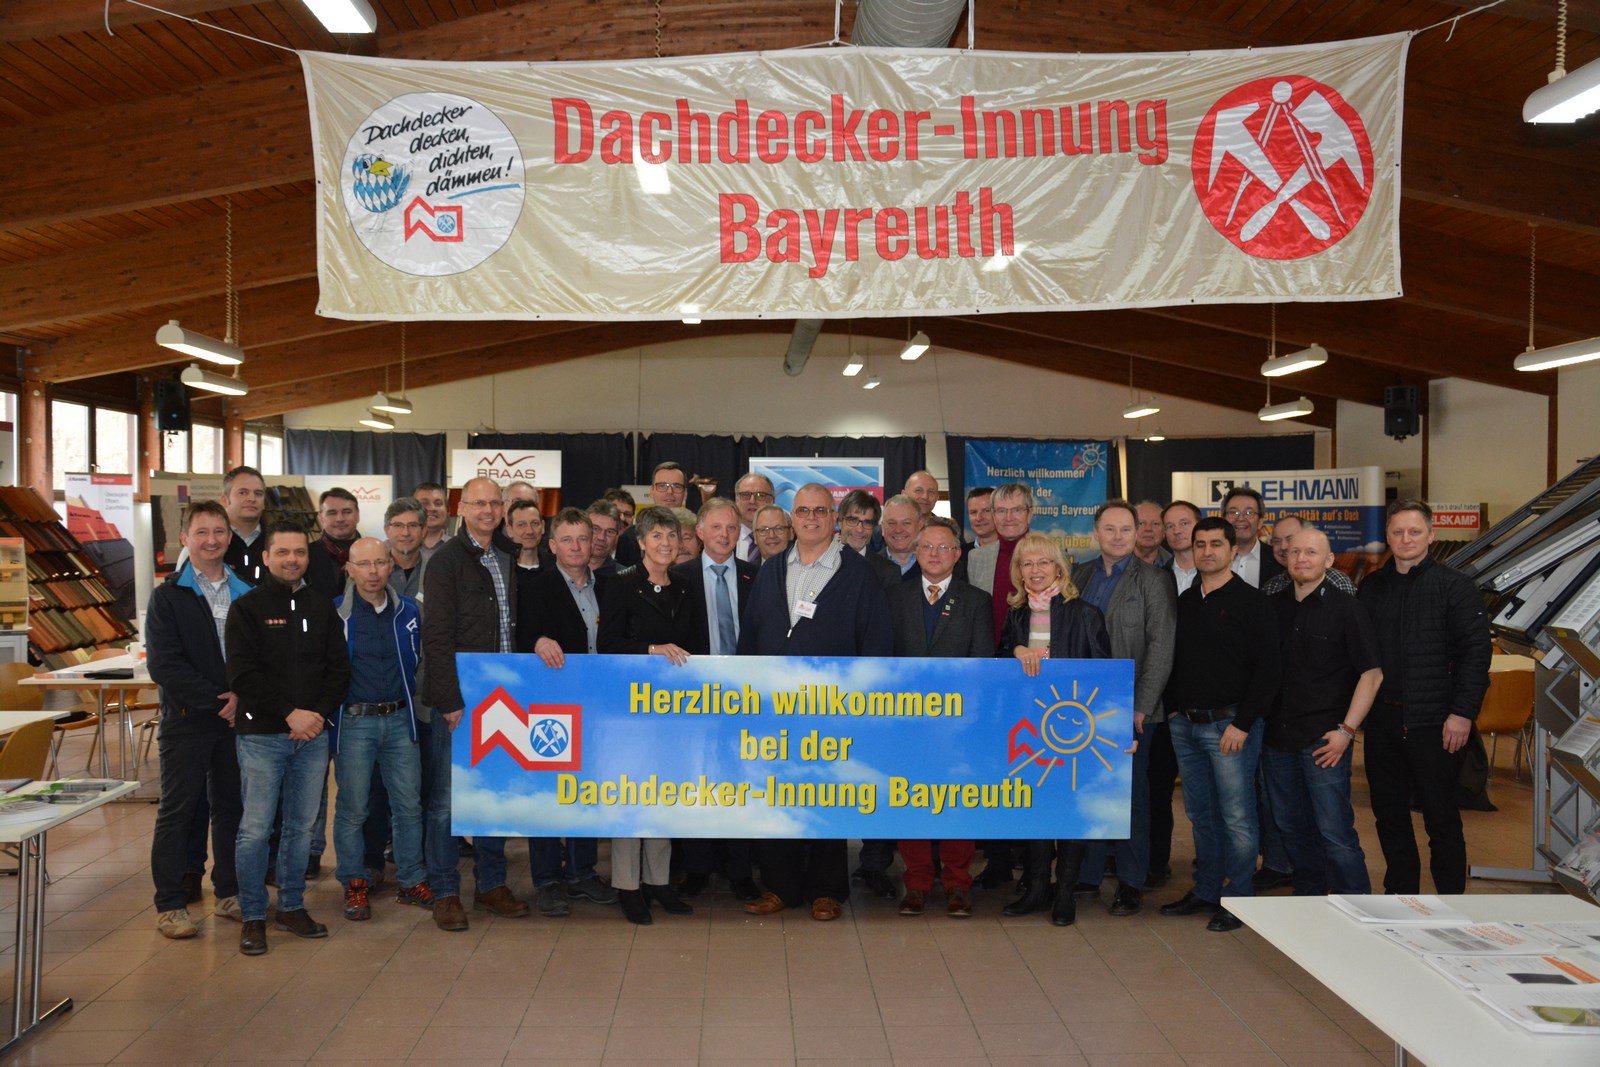 Dachdecker Innung Bayreuth - Dachmesse 2017